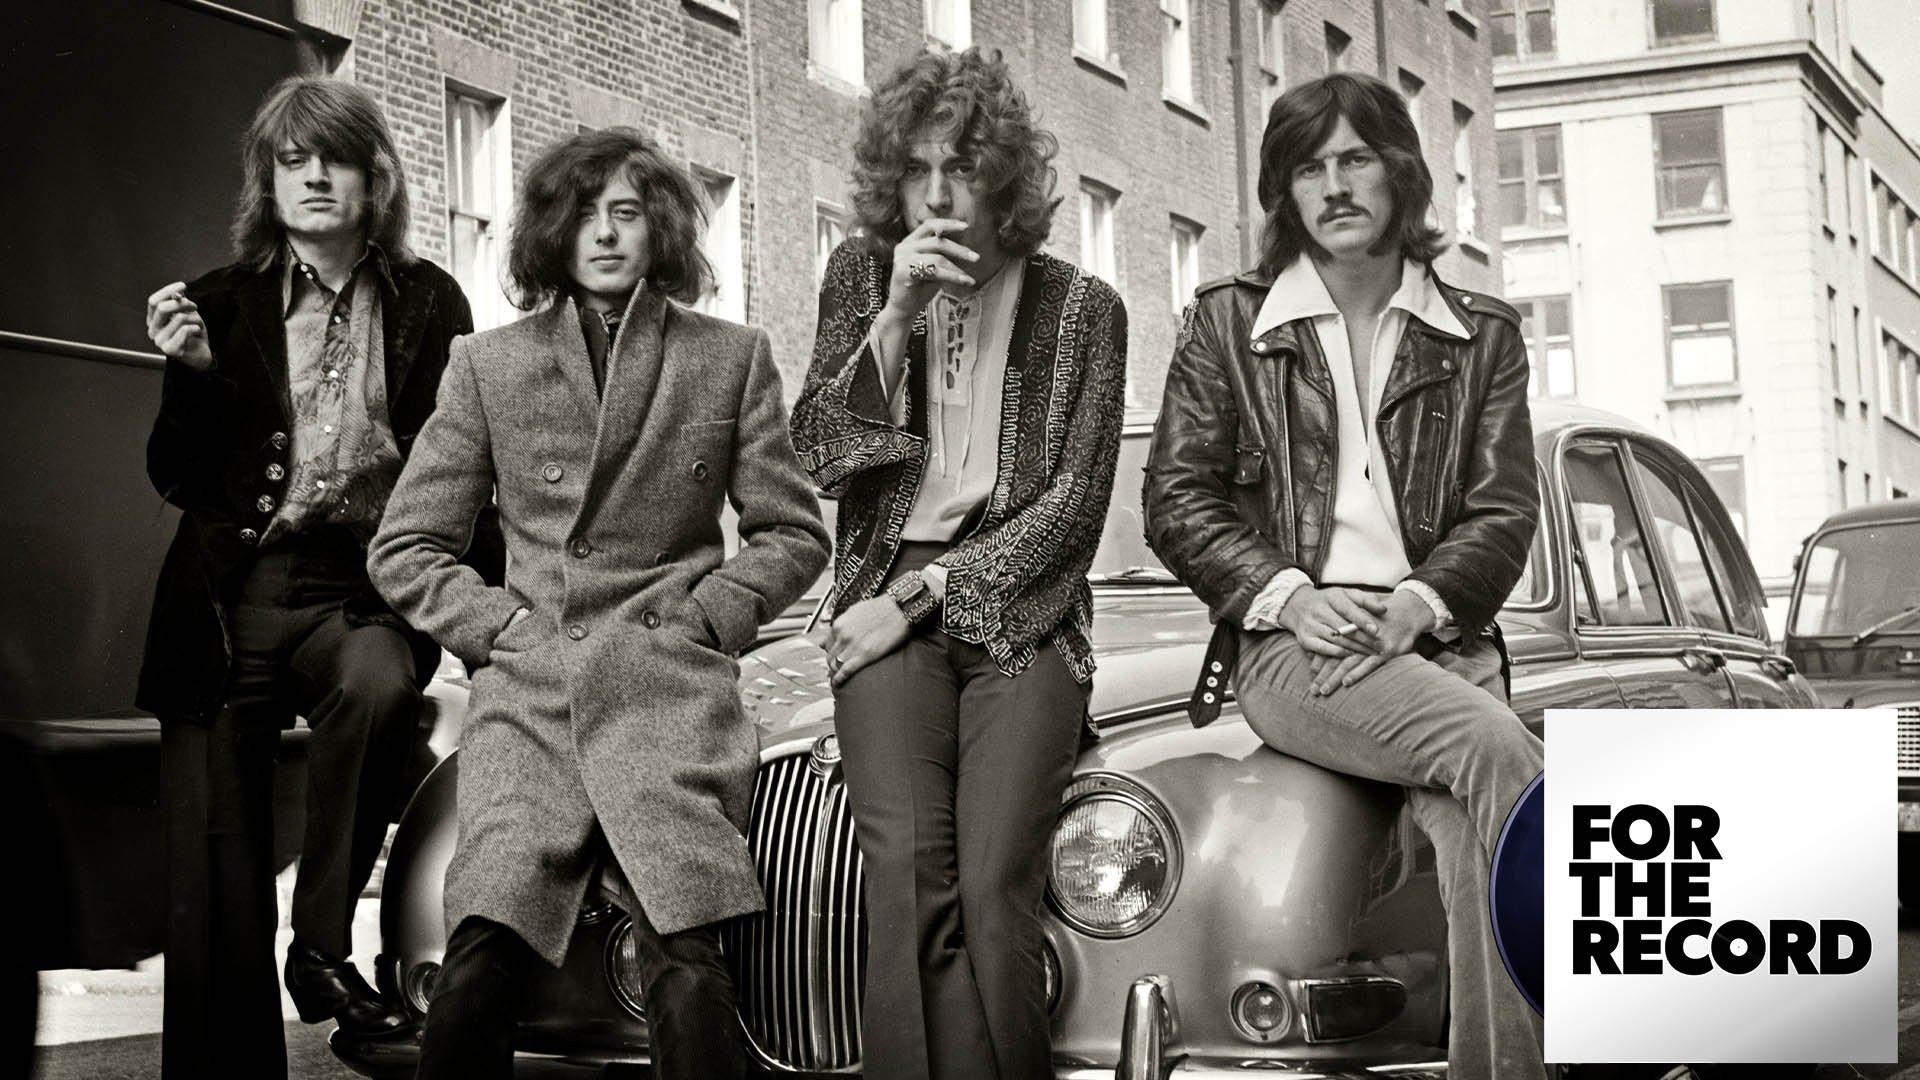 Led Zeppelin posing on a car